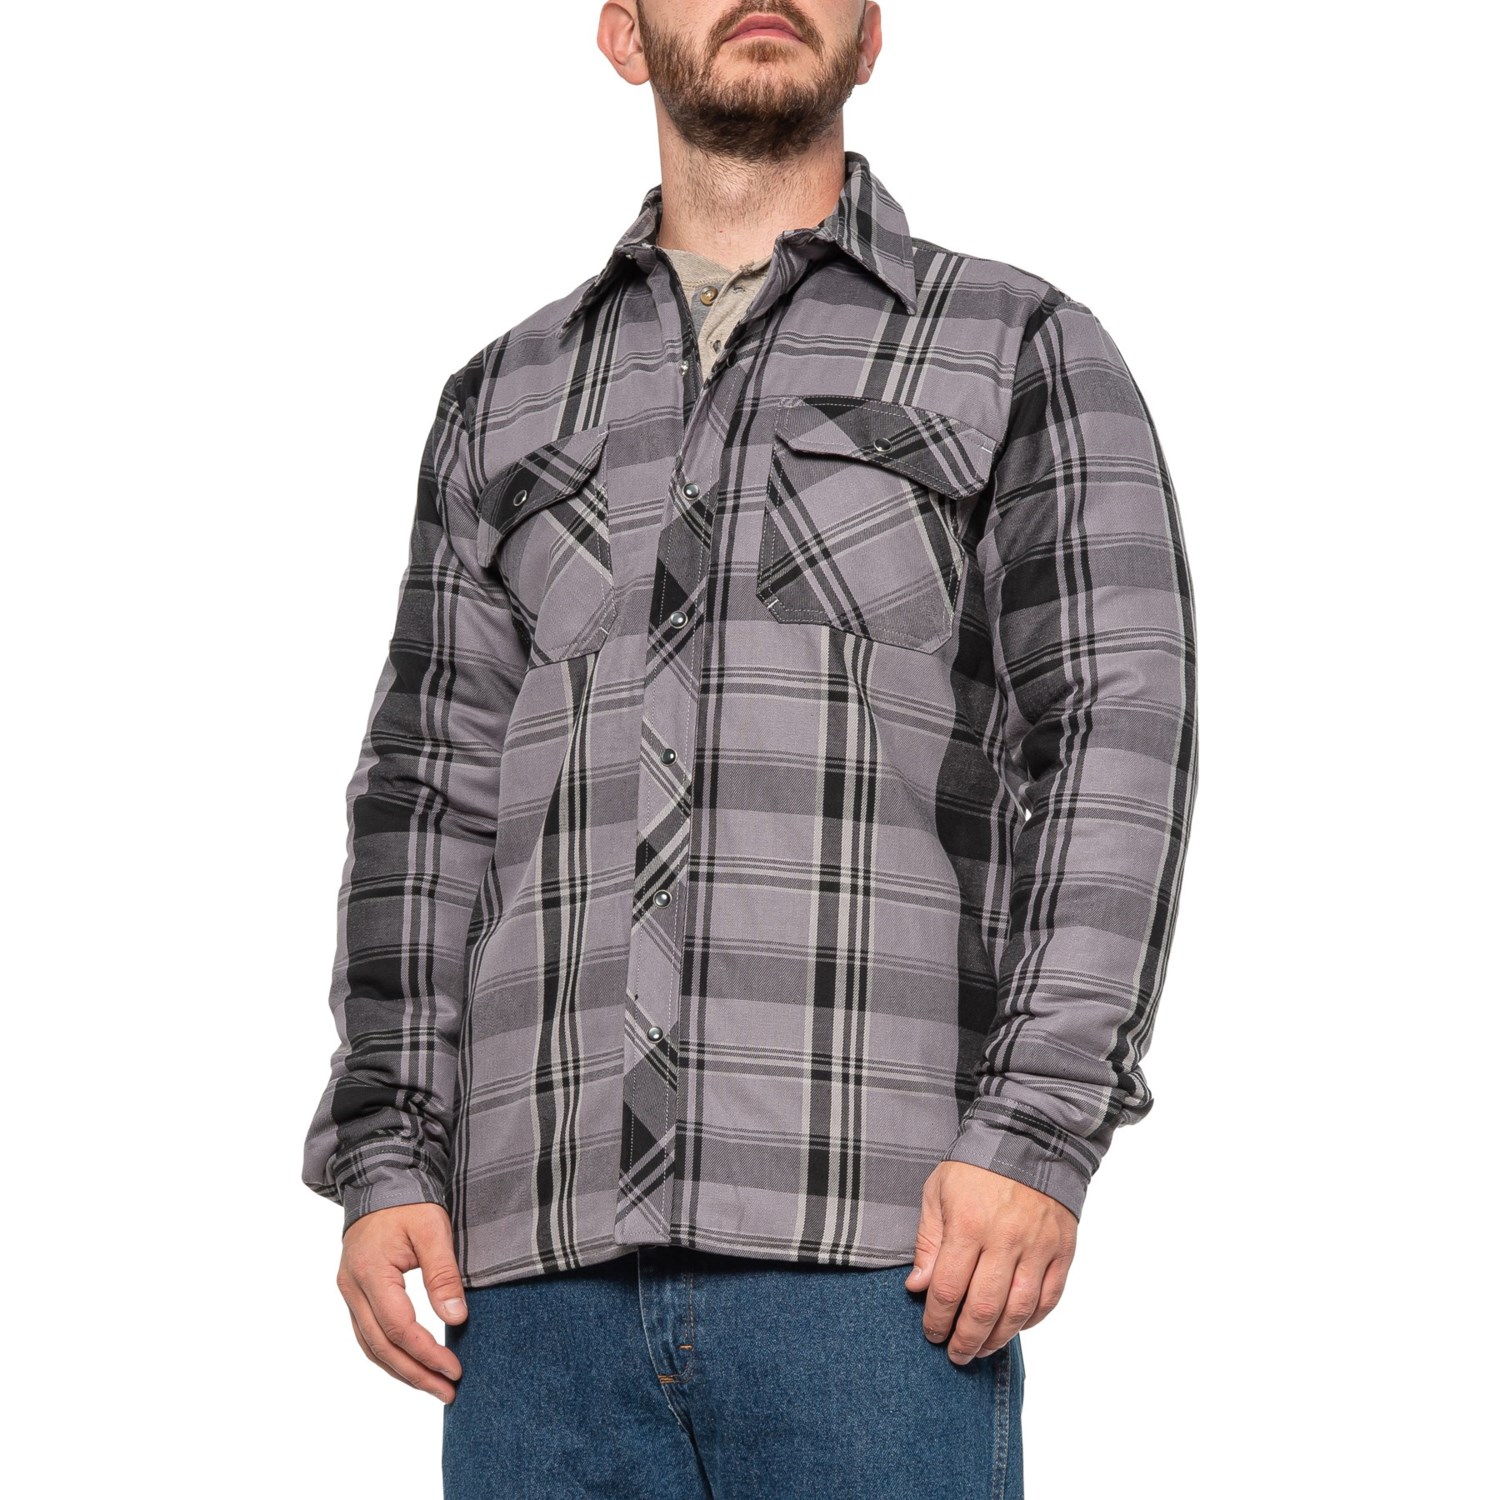 Dickies Fleece-Lined Shirt Jacket (For Men) - Save 44%